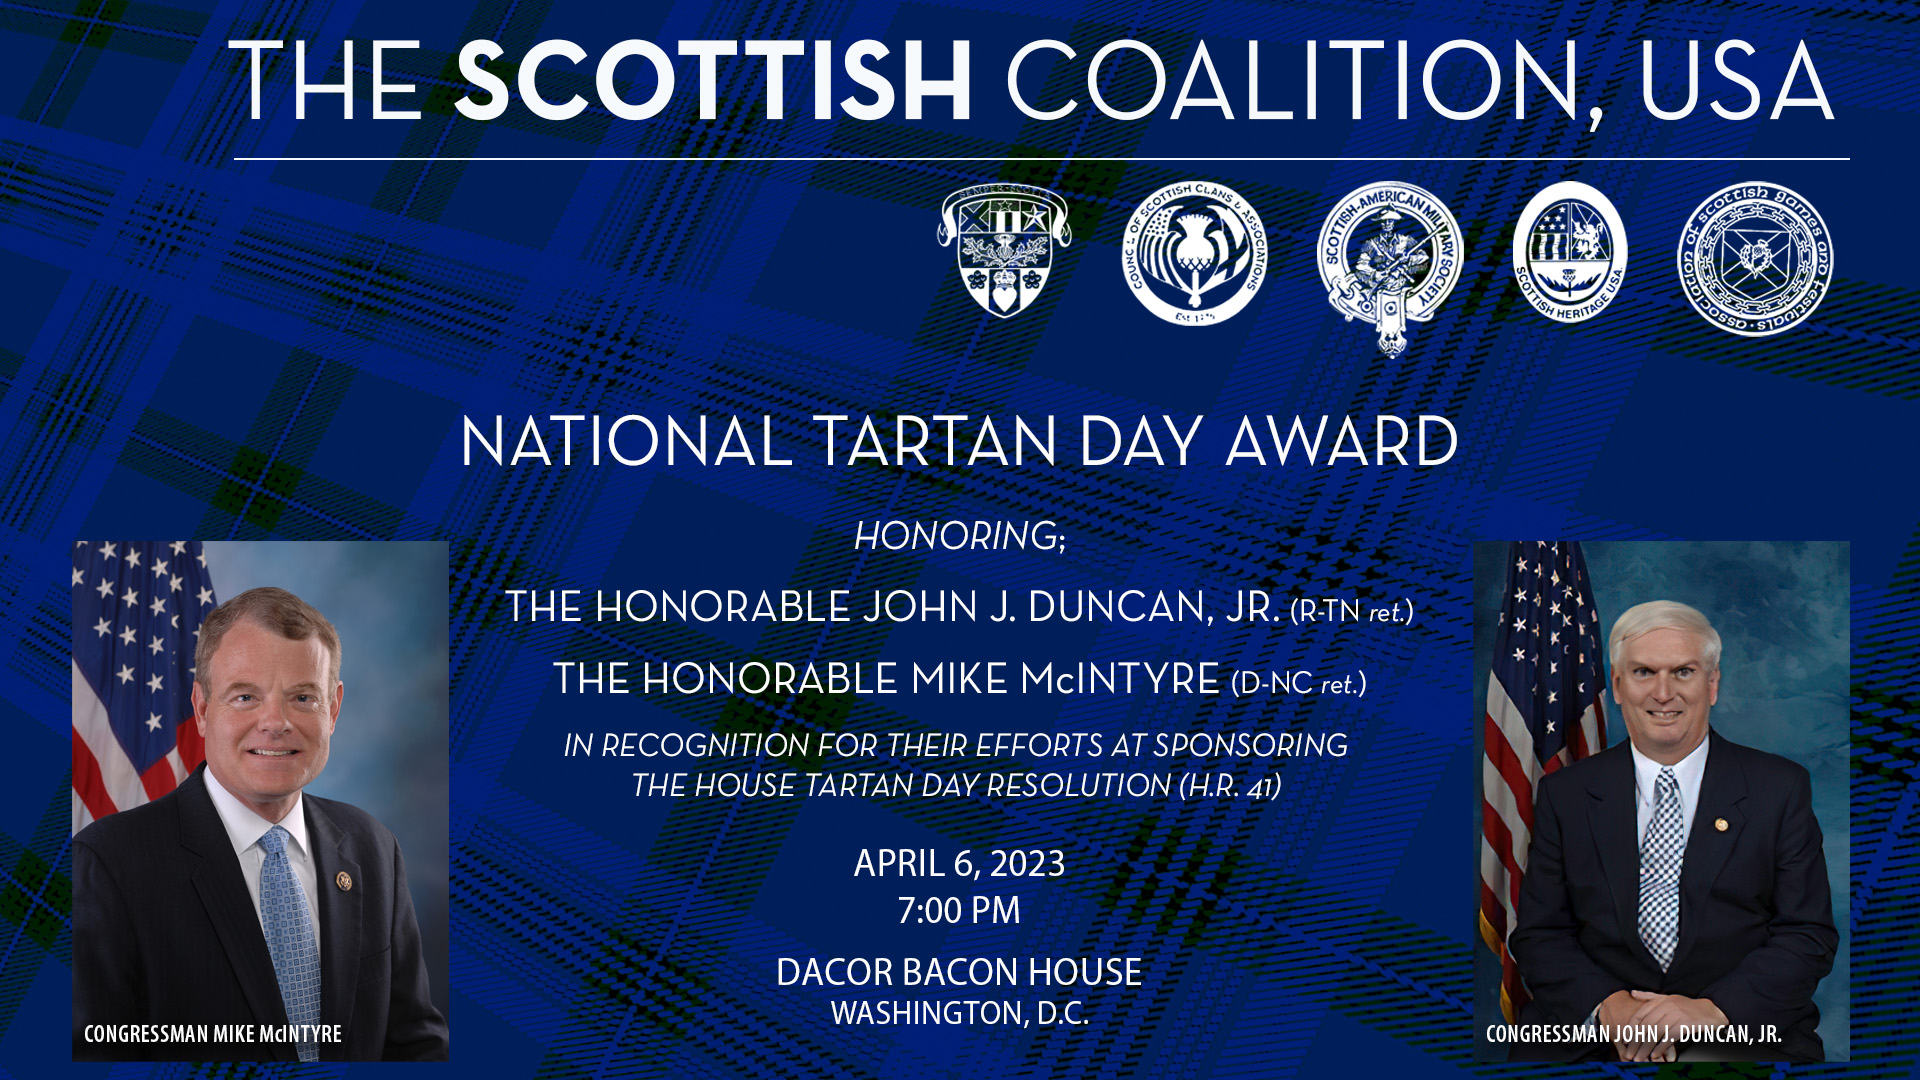 The Scottish Coalition National Tartan Day Award announcement